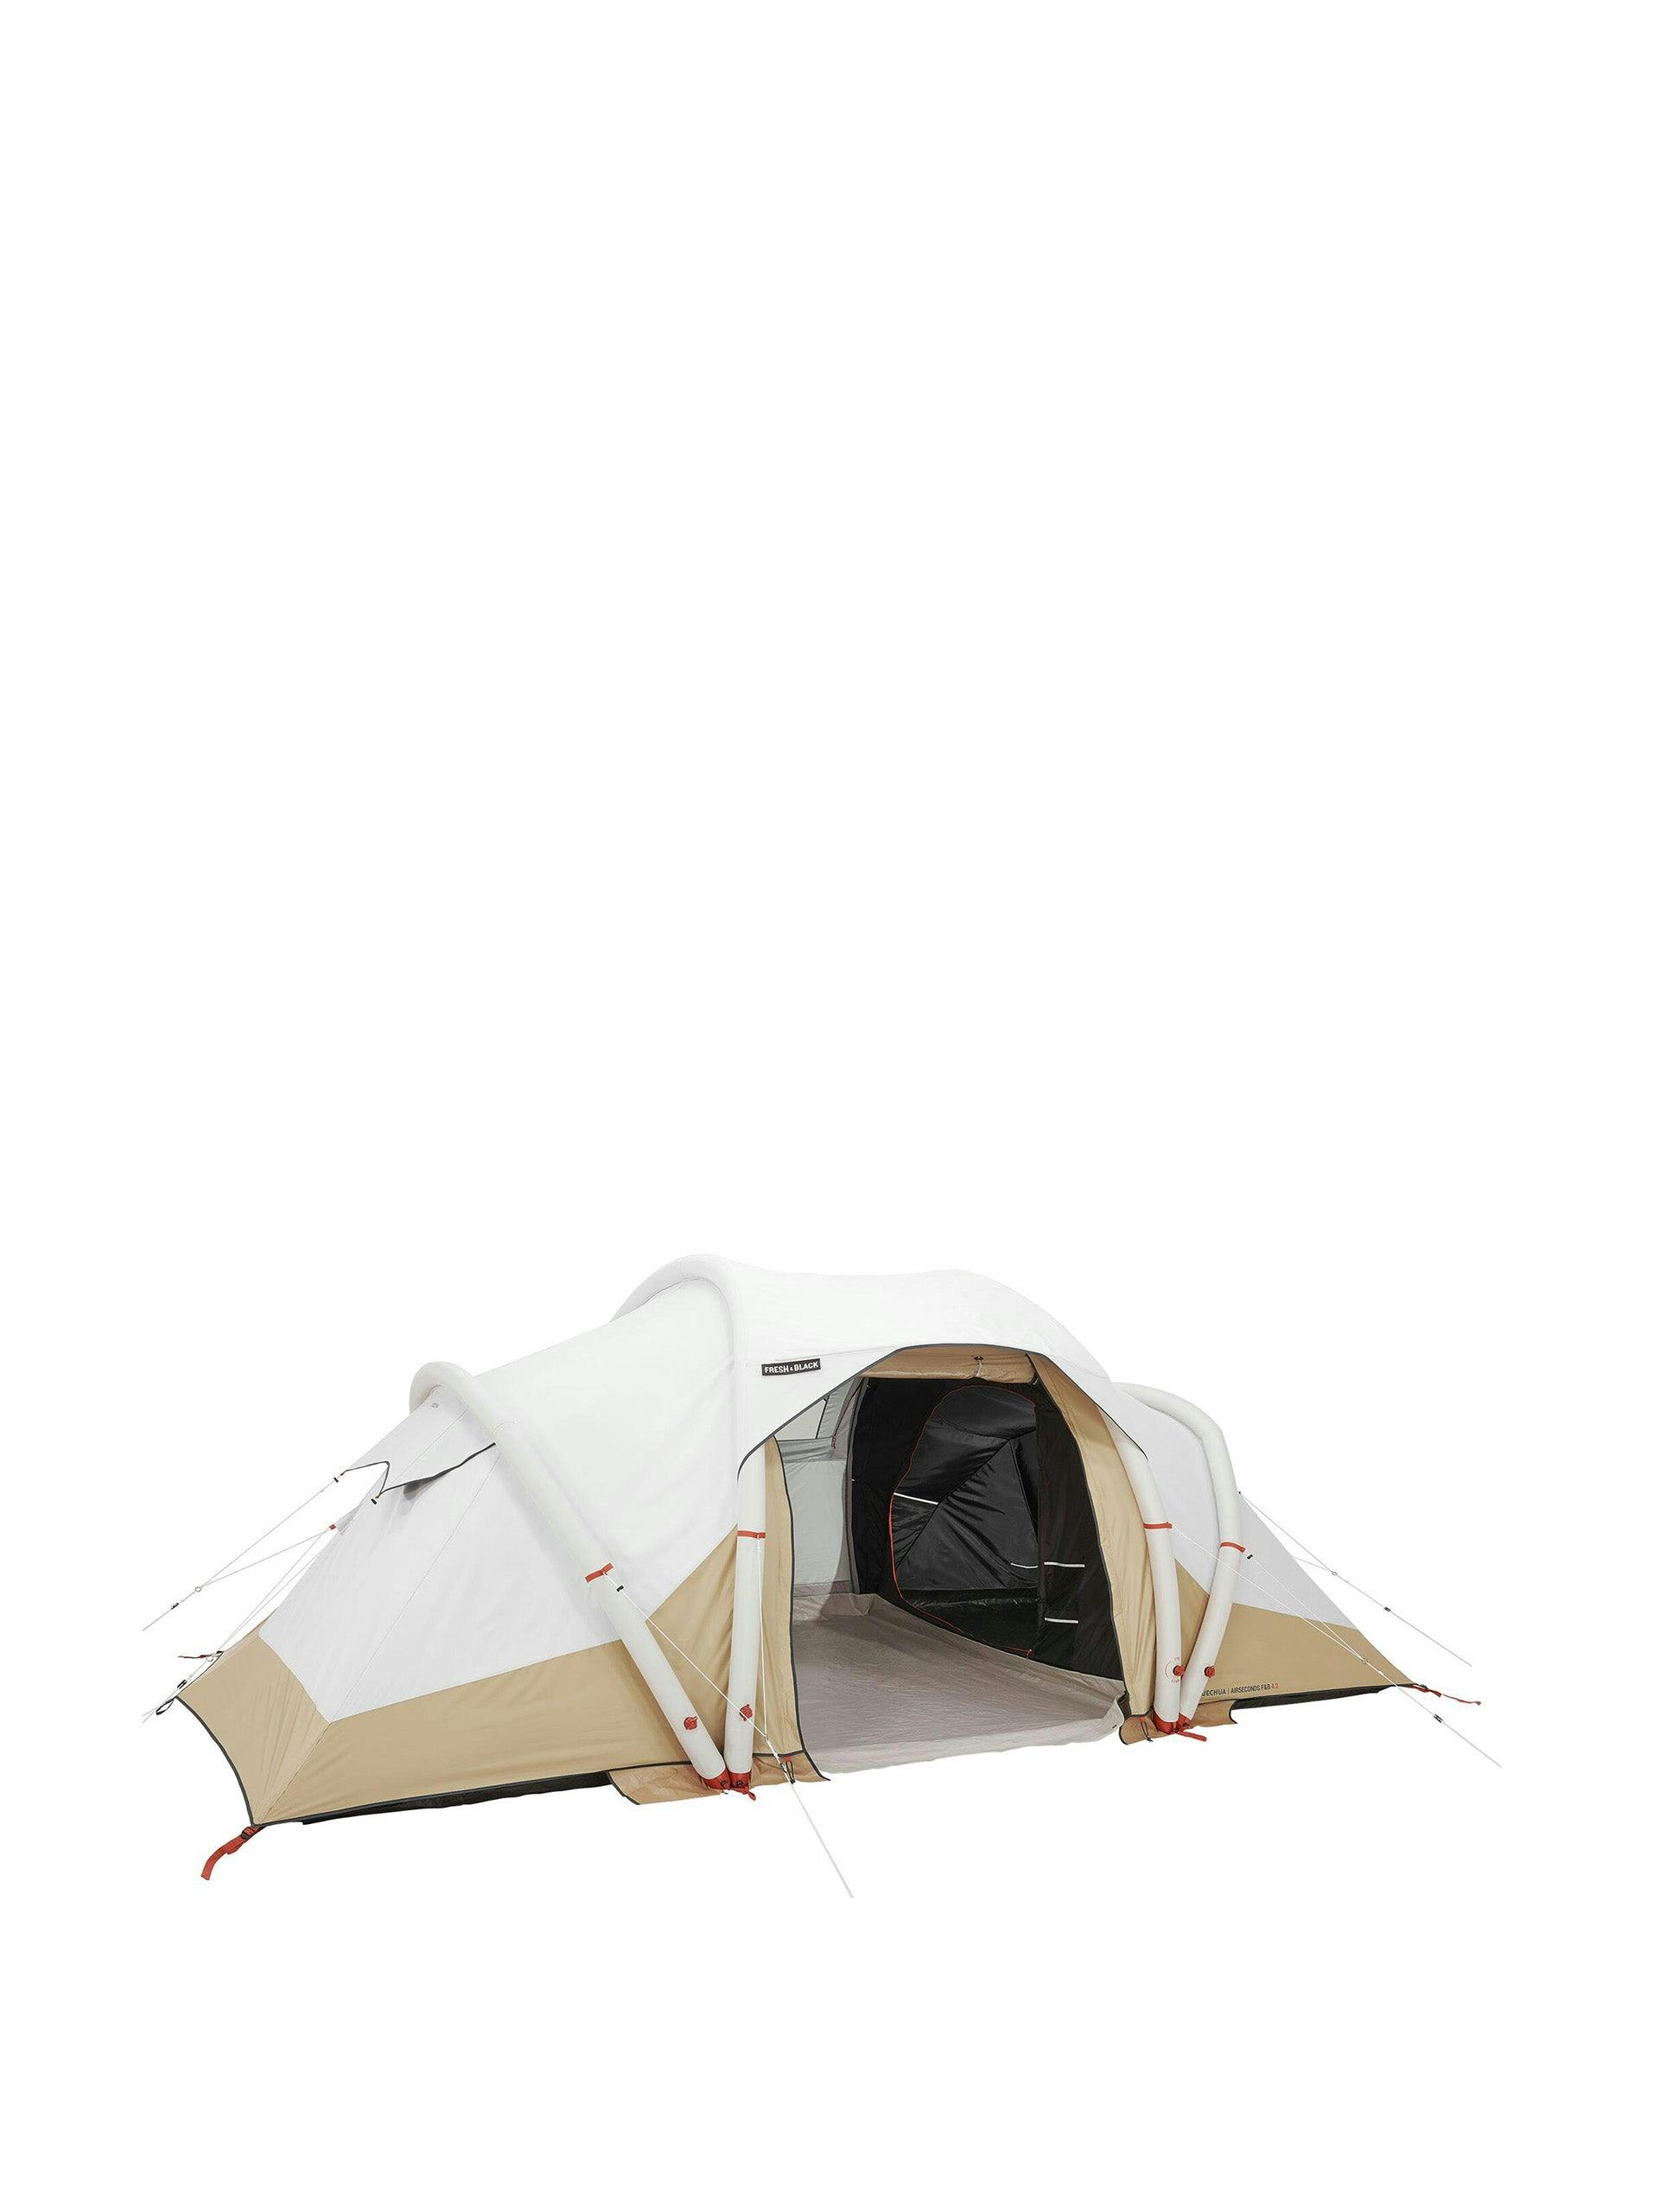 4-man inflatable blackout tent